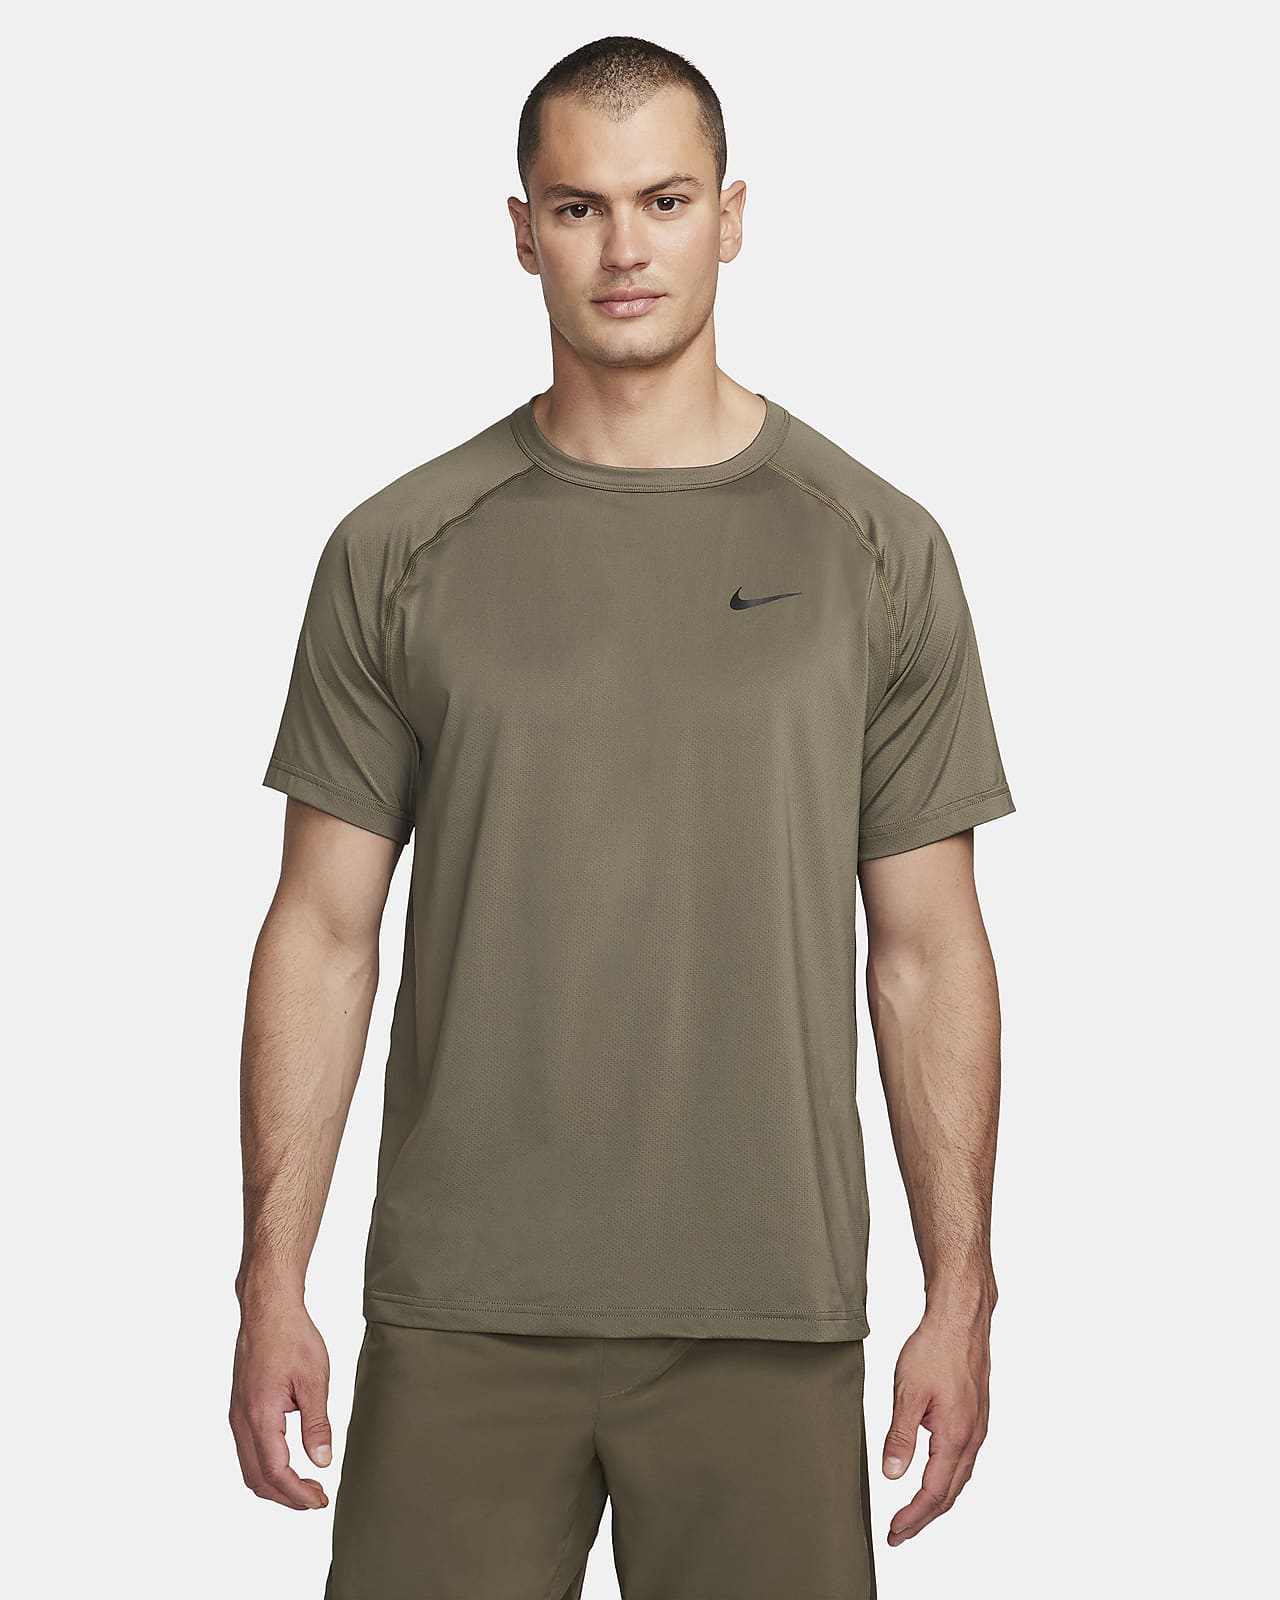 Nike Ready Men's Dri-FIT Short-sleeve Fitness Top